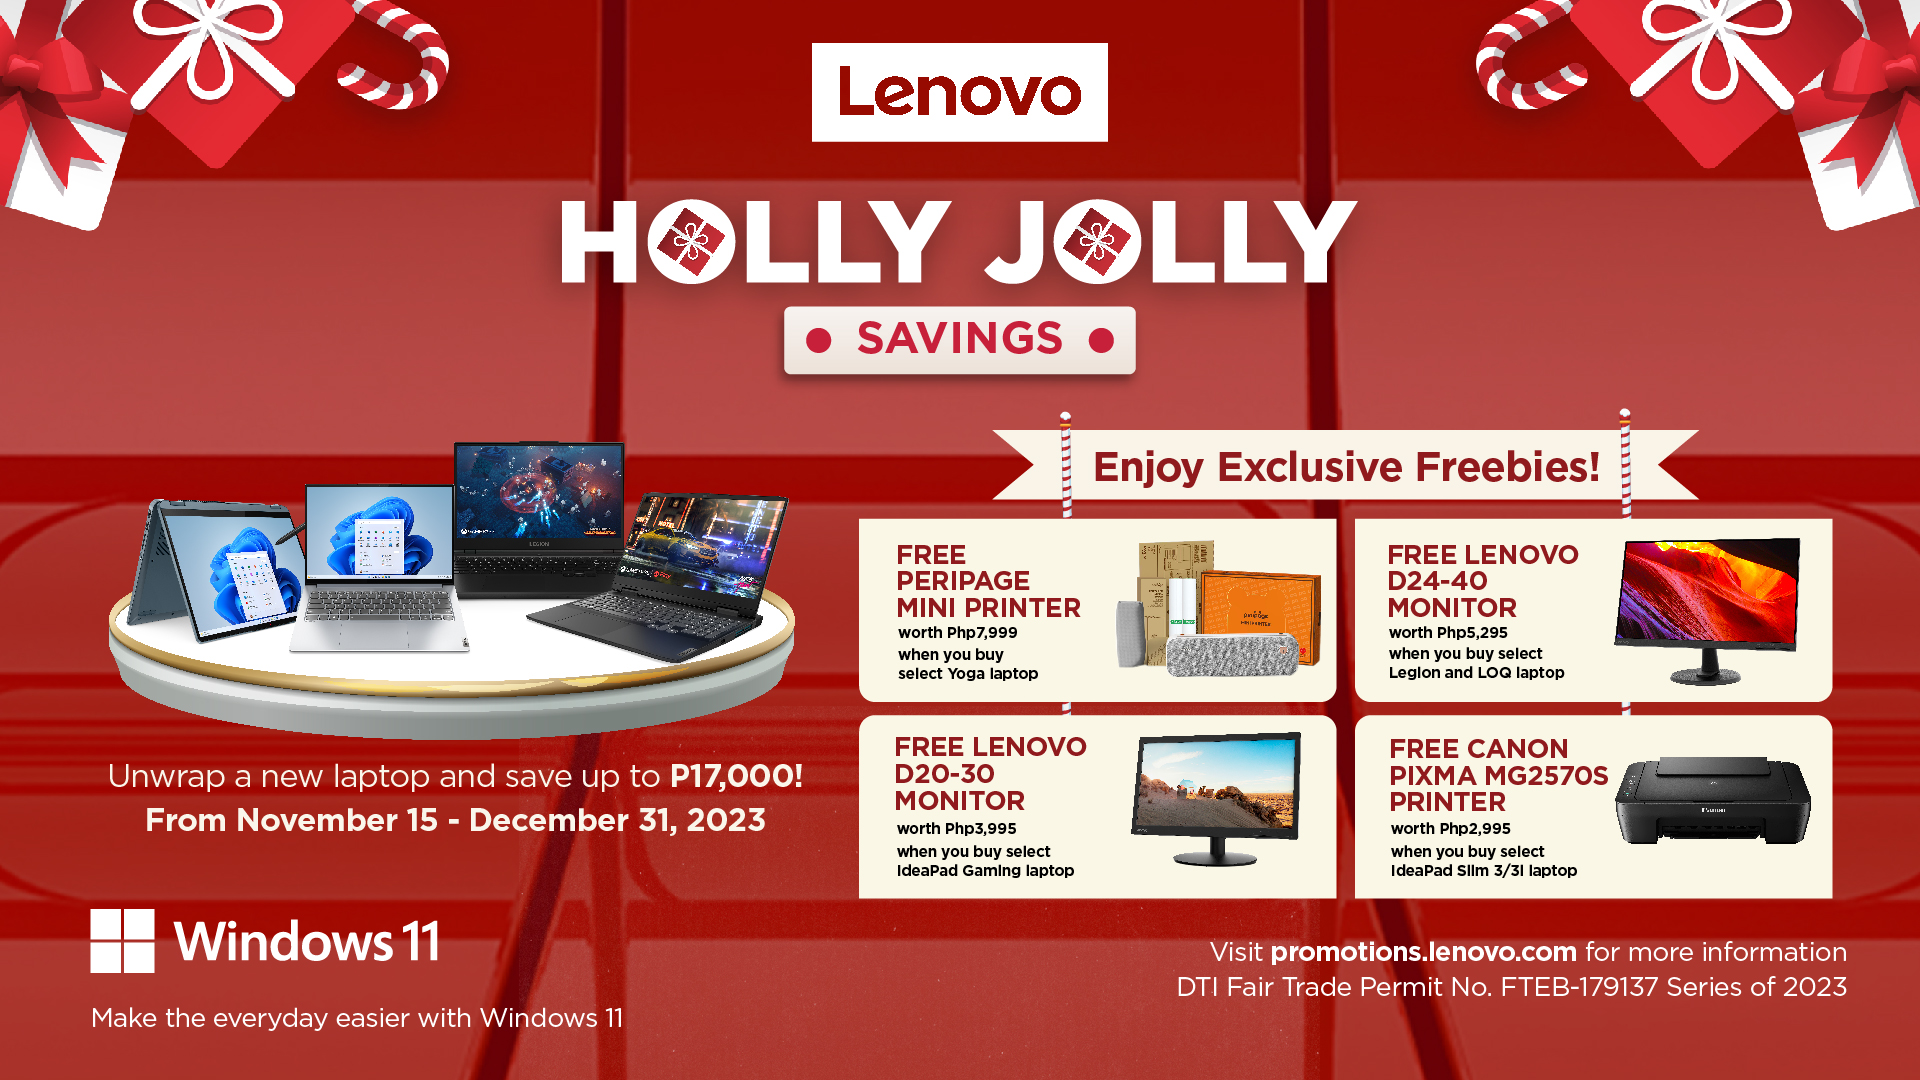 Lenovo Holly Jolly Savings Promo 2023